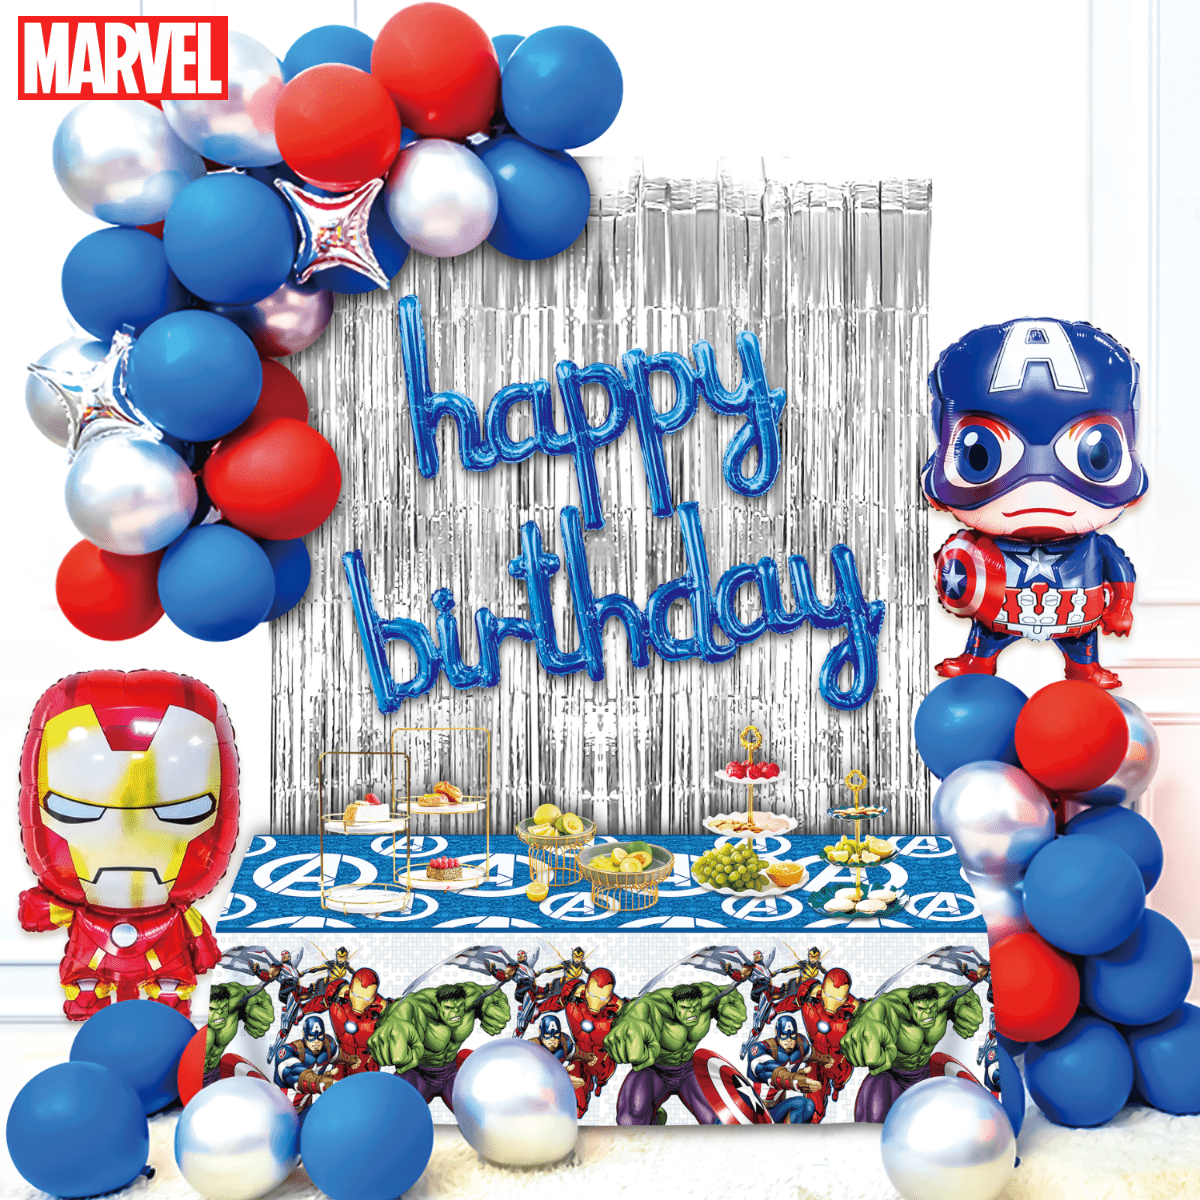 Pack de 4 pegatinas de los Vengadores de Marvel, 100 pegatinas de  superhéroes de los Vengadores para suministros de fiesta de superhéroes,  obsequios de fiesta con Capitán América, Iron Man, Thor (pegatinas